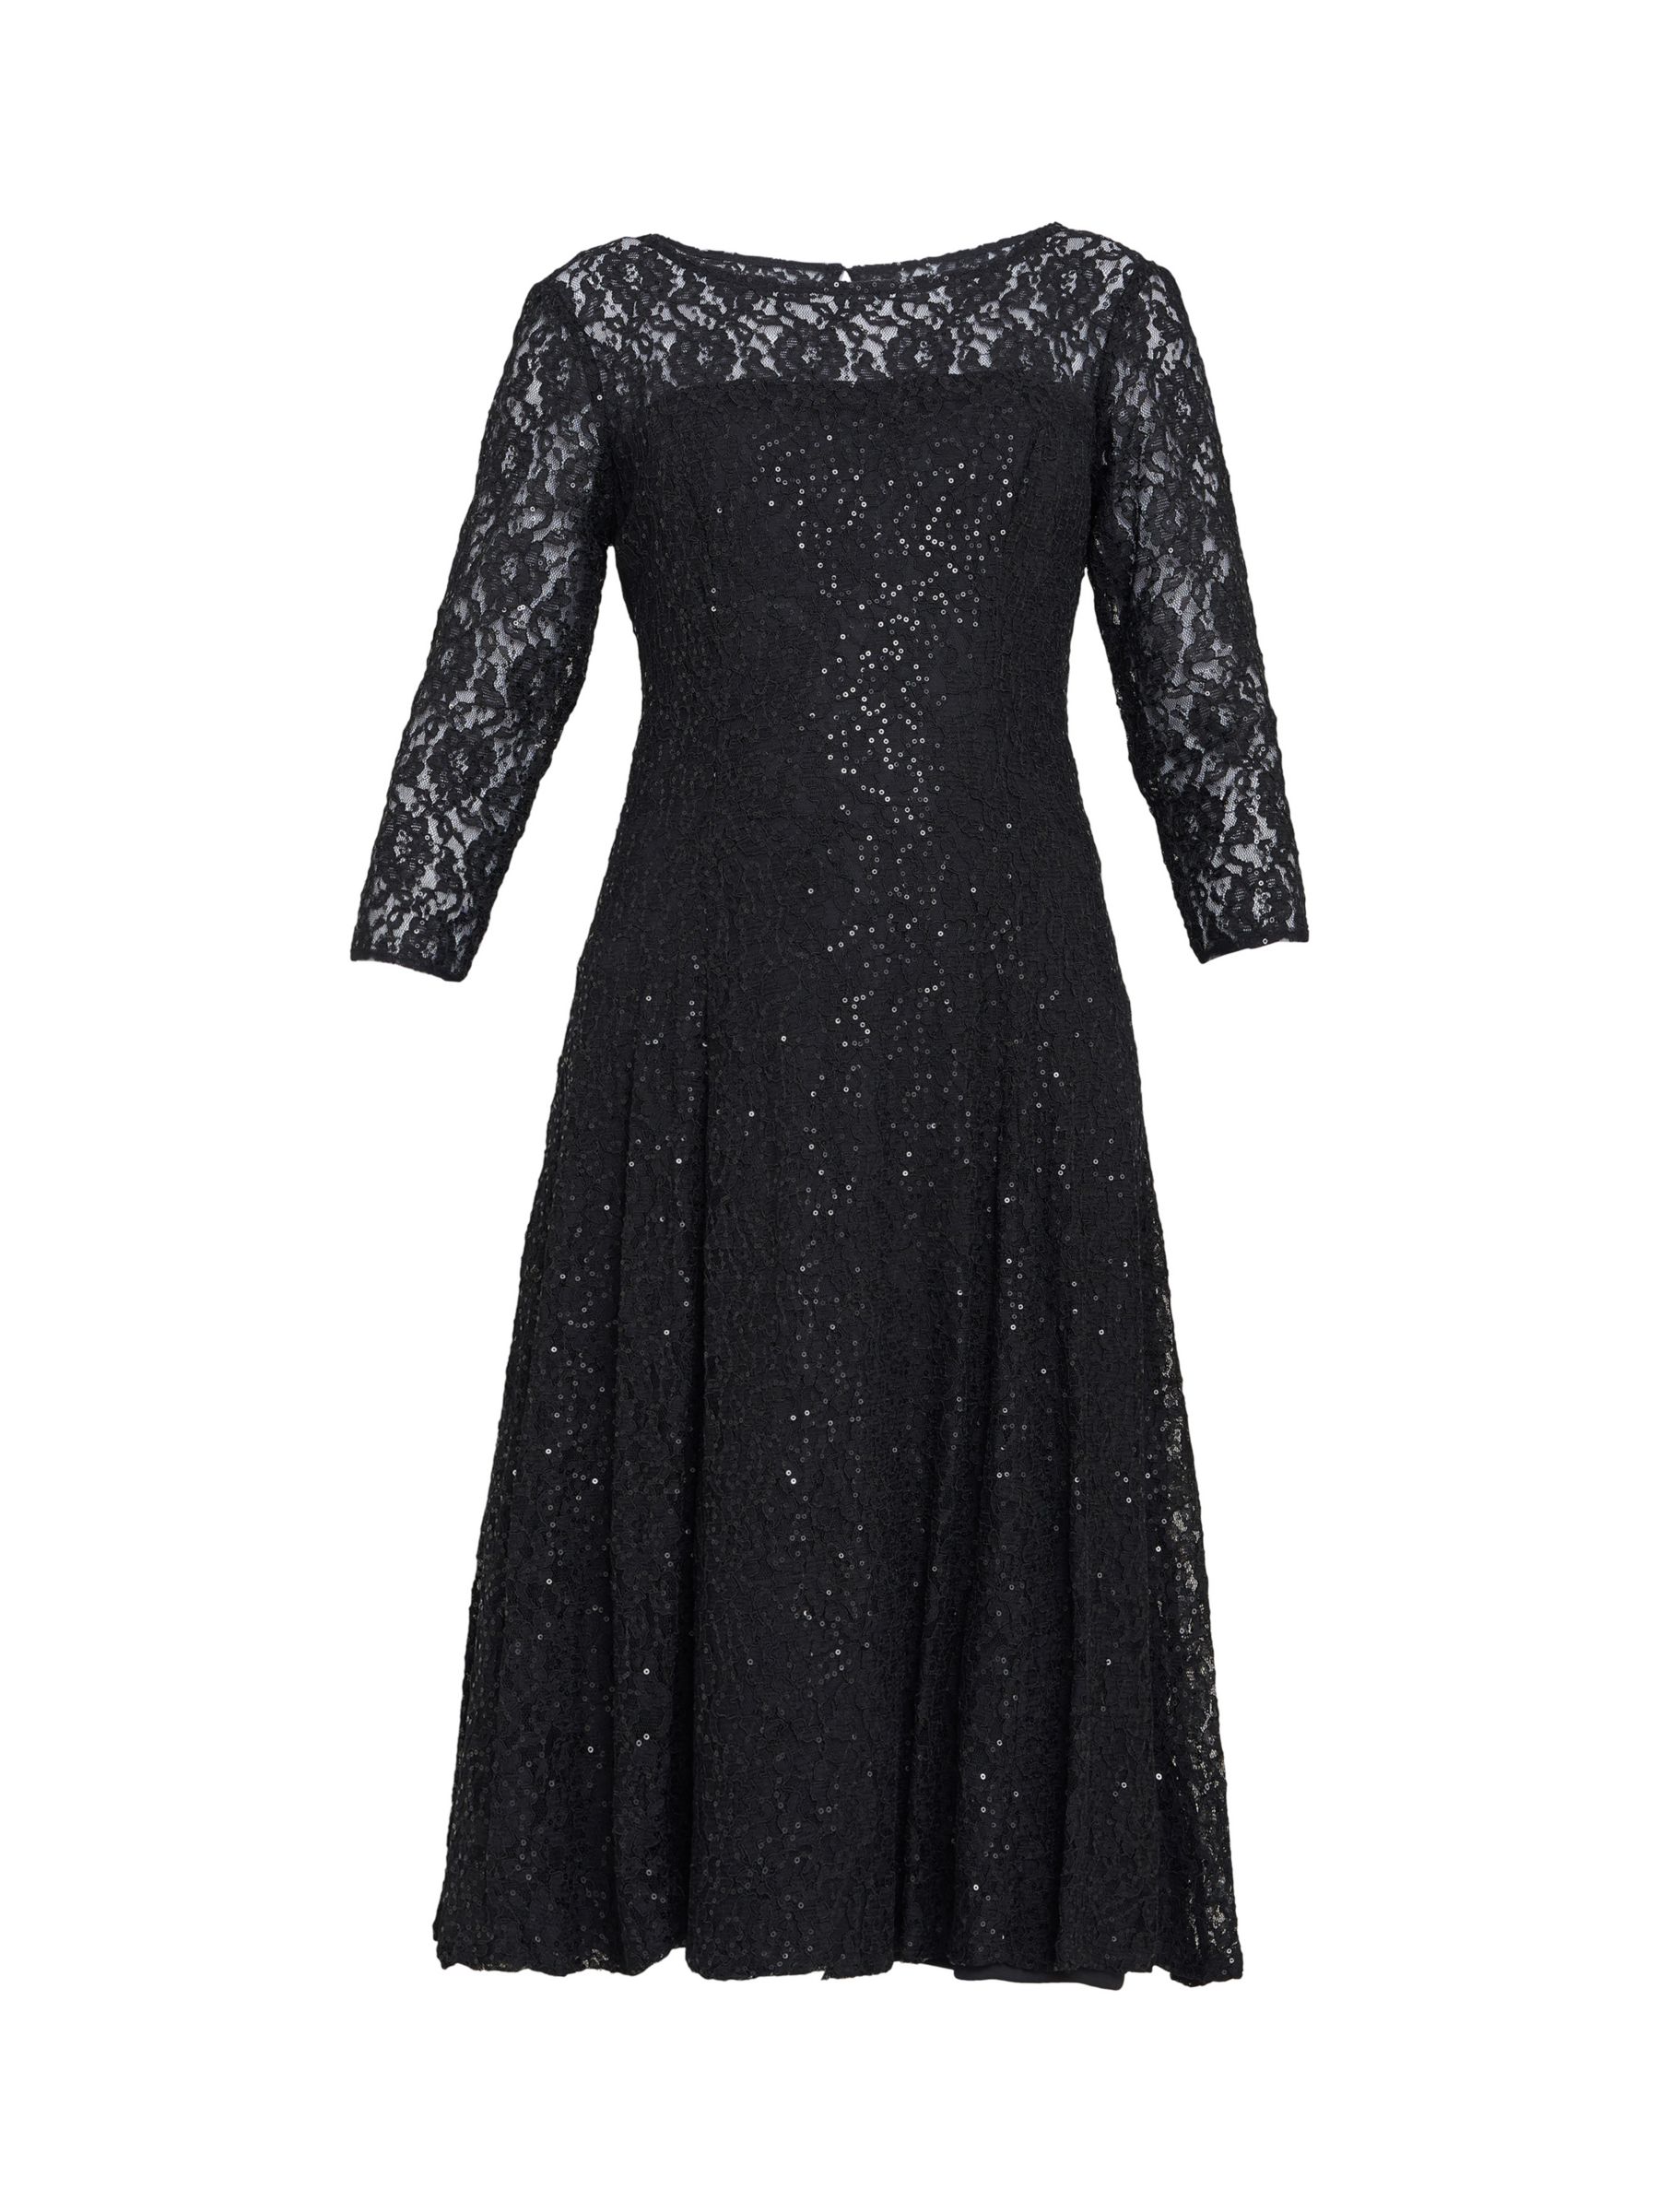 Buy Gina Bacconi Elianna Sequin Cocktail Dress, Black Online at johnlewis.com